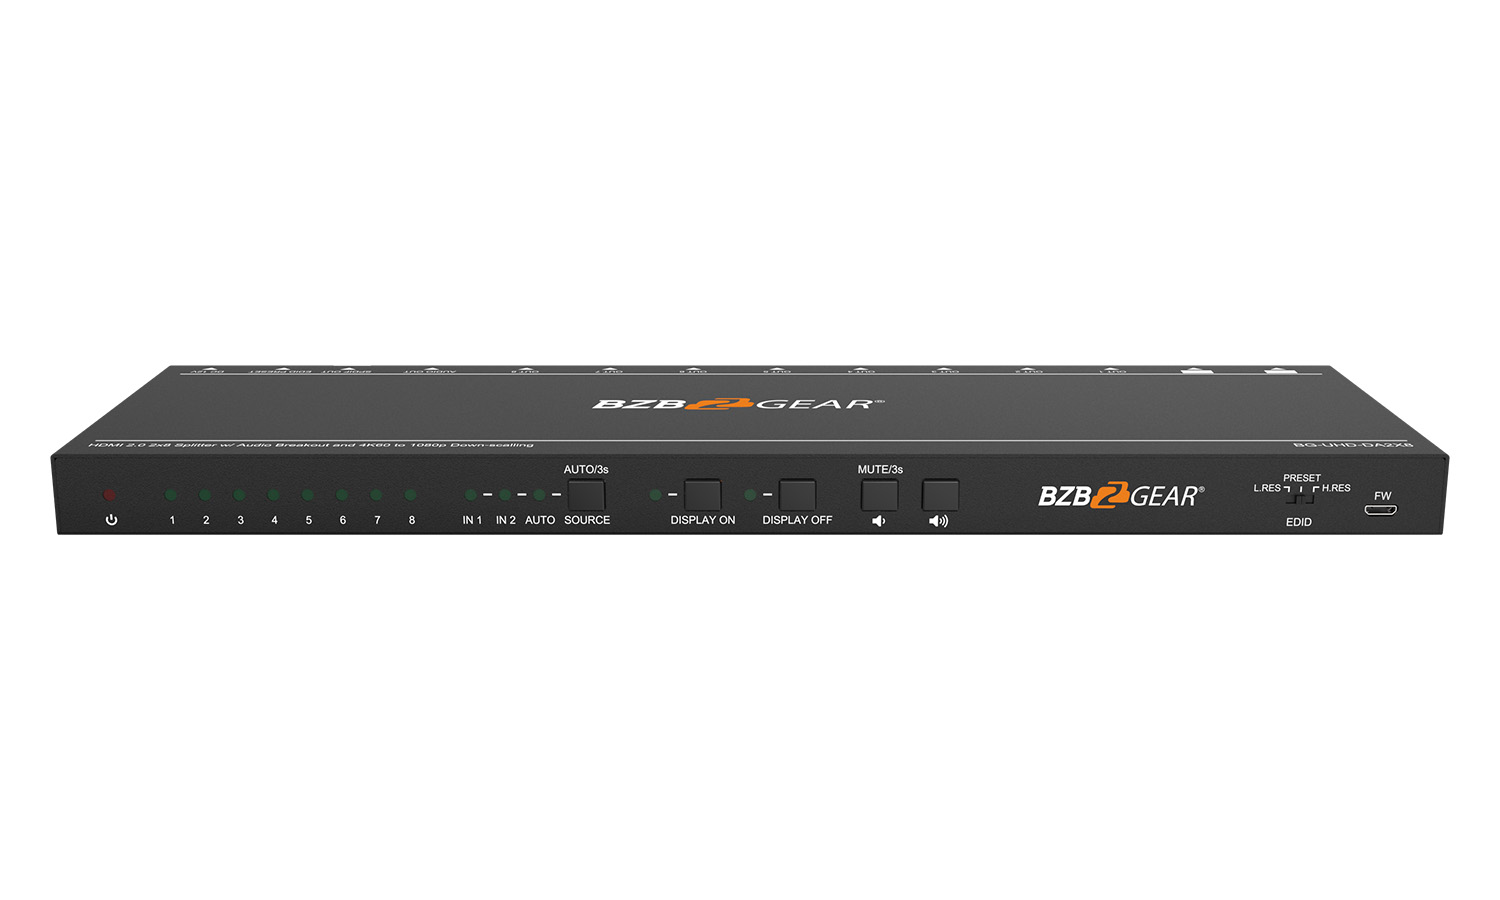 BG-UHD-DA2X8 2X8 4K 18Gbps UHD HDMI Splitter/Distribution Amplifier with Downscaling/Audio De-Embedding and CEC Control by BZBGEAR